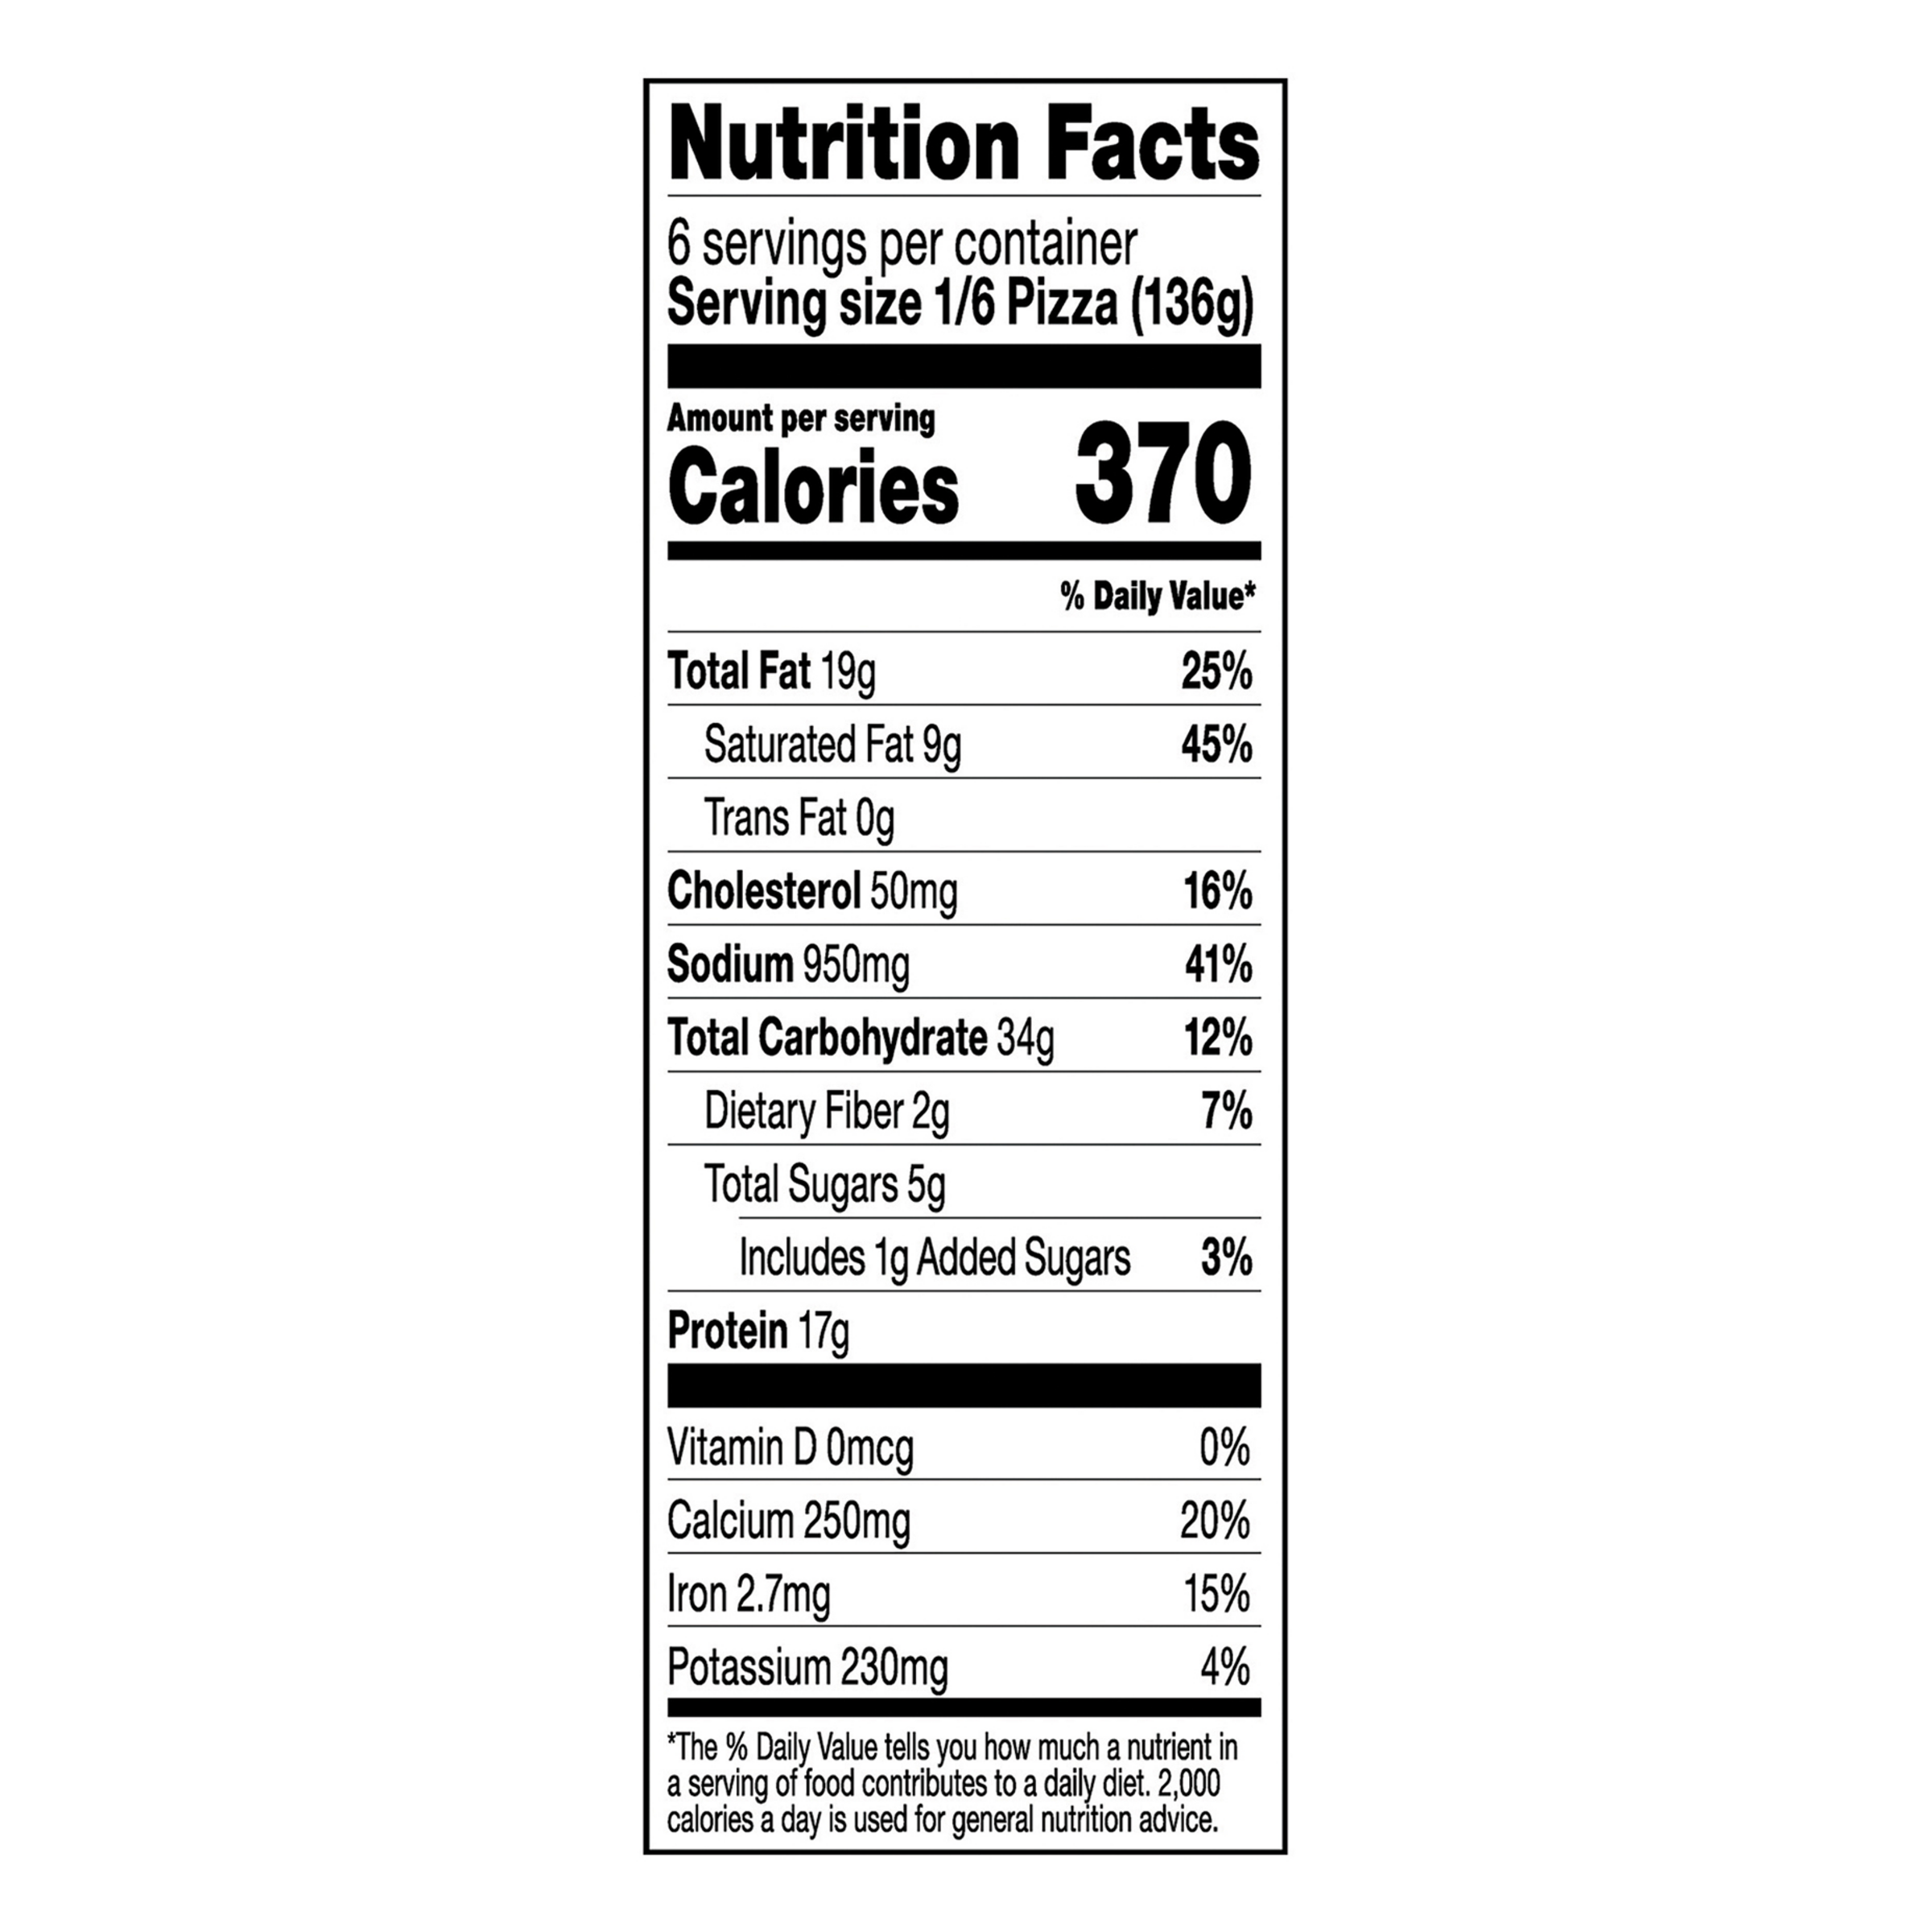 Nutrition Facts Serving Size 1/6 Pizza (136g)
				Servings per container	6
				Calories 370
				Total Fat 19 g
				% DV 25%
				Saturated Fat 9 g
				% DV 45%
				Trans Fat 0 g
				Cholesterol 50 mg
				% DV 16%
				Sodium	950 mg
				% DV 41%
				Total Carbohydrate 34 g
				% DV 12%
				Dietary Fiber 2 g
				% DV 7%
				Total Sugars 5 g
				Added Sugars 1 g
				% DV 3%
				Protein	17 g
				Vitamin D 0 MCG
				% DV 0%
				Calcium 250 mg
				% DV 20%
				Iron 2.7 mg
				% DV 15%
				Potassium 230 mg
				% DV 4%